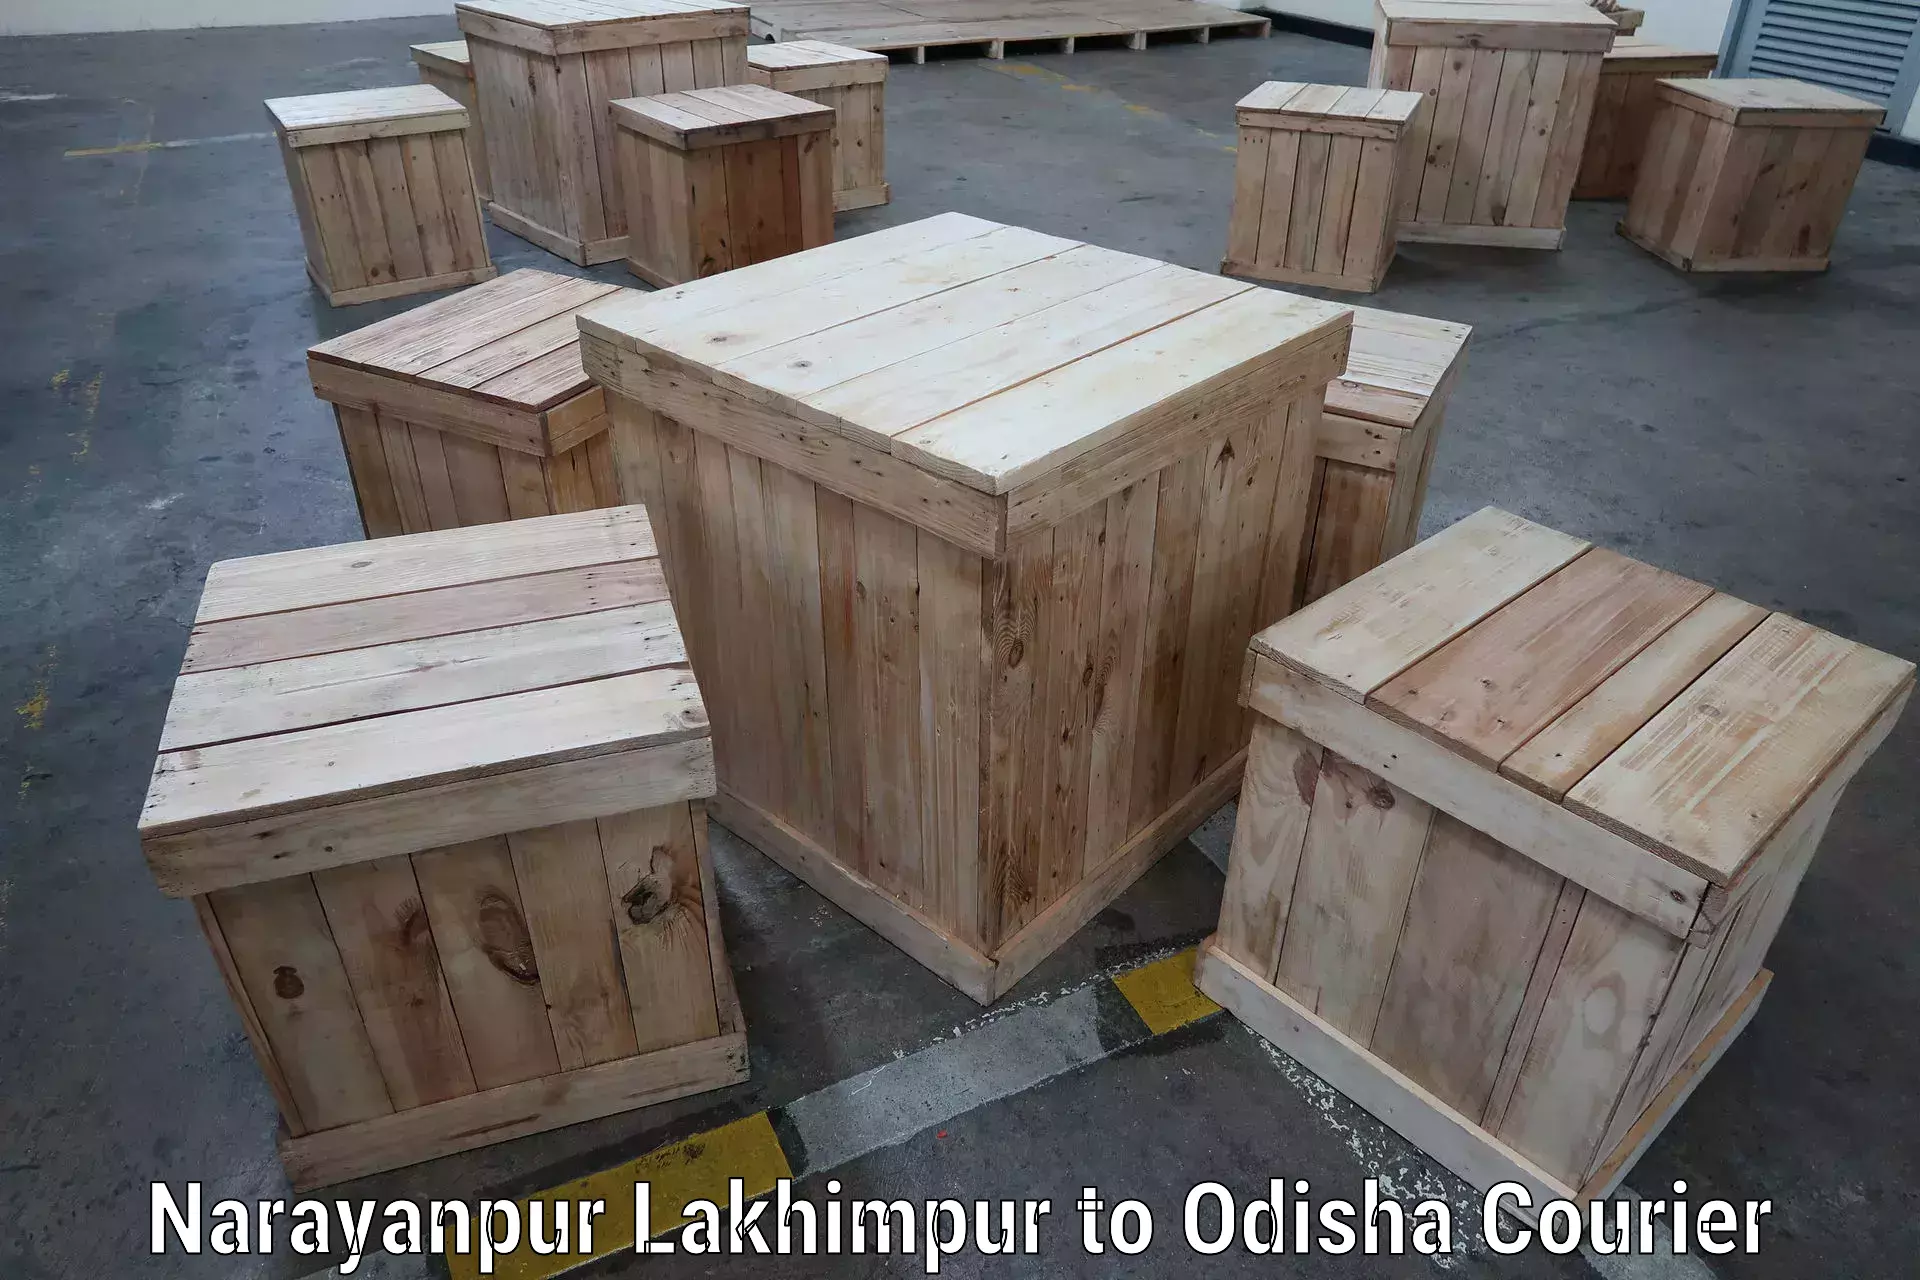 Global shipping solutions Narayanpur Lakhimpur to Chandipur